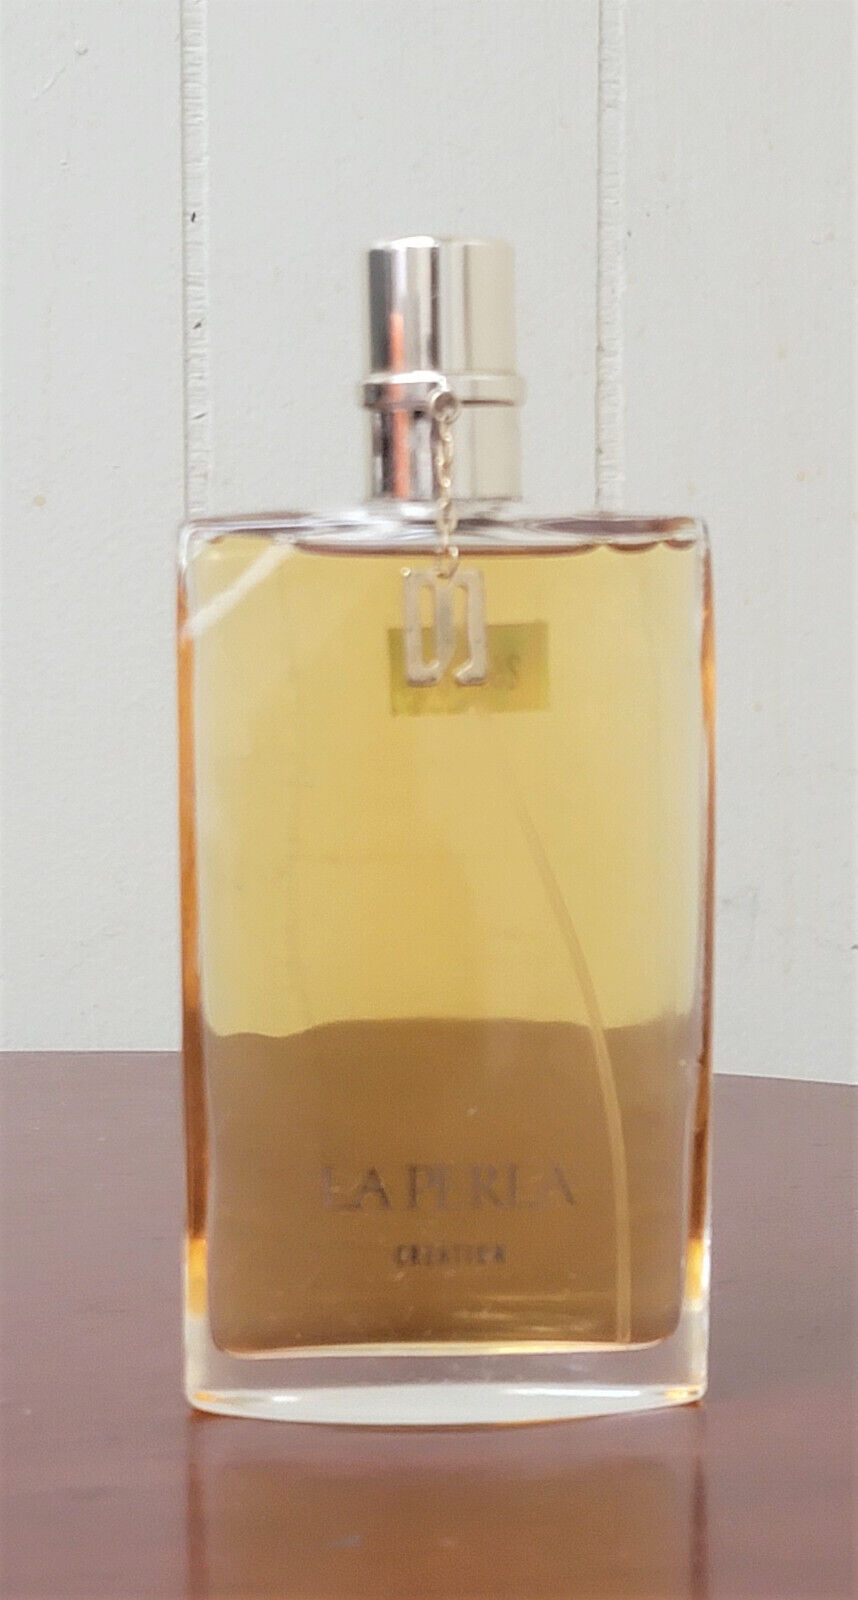 La Perla Creation by La Perla  3.3 oz / 100 ml edp spray perfume for women femme